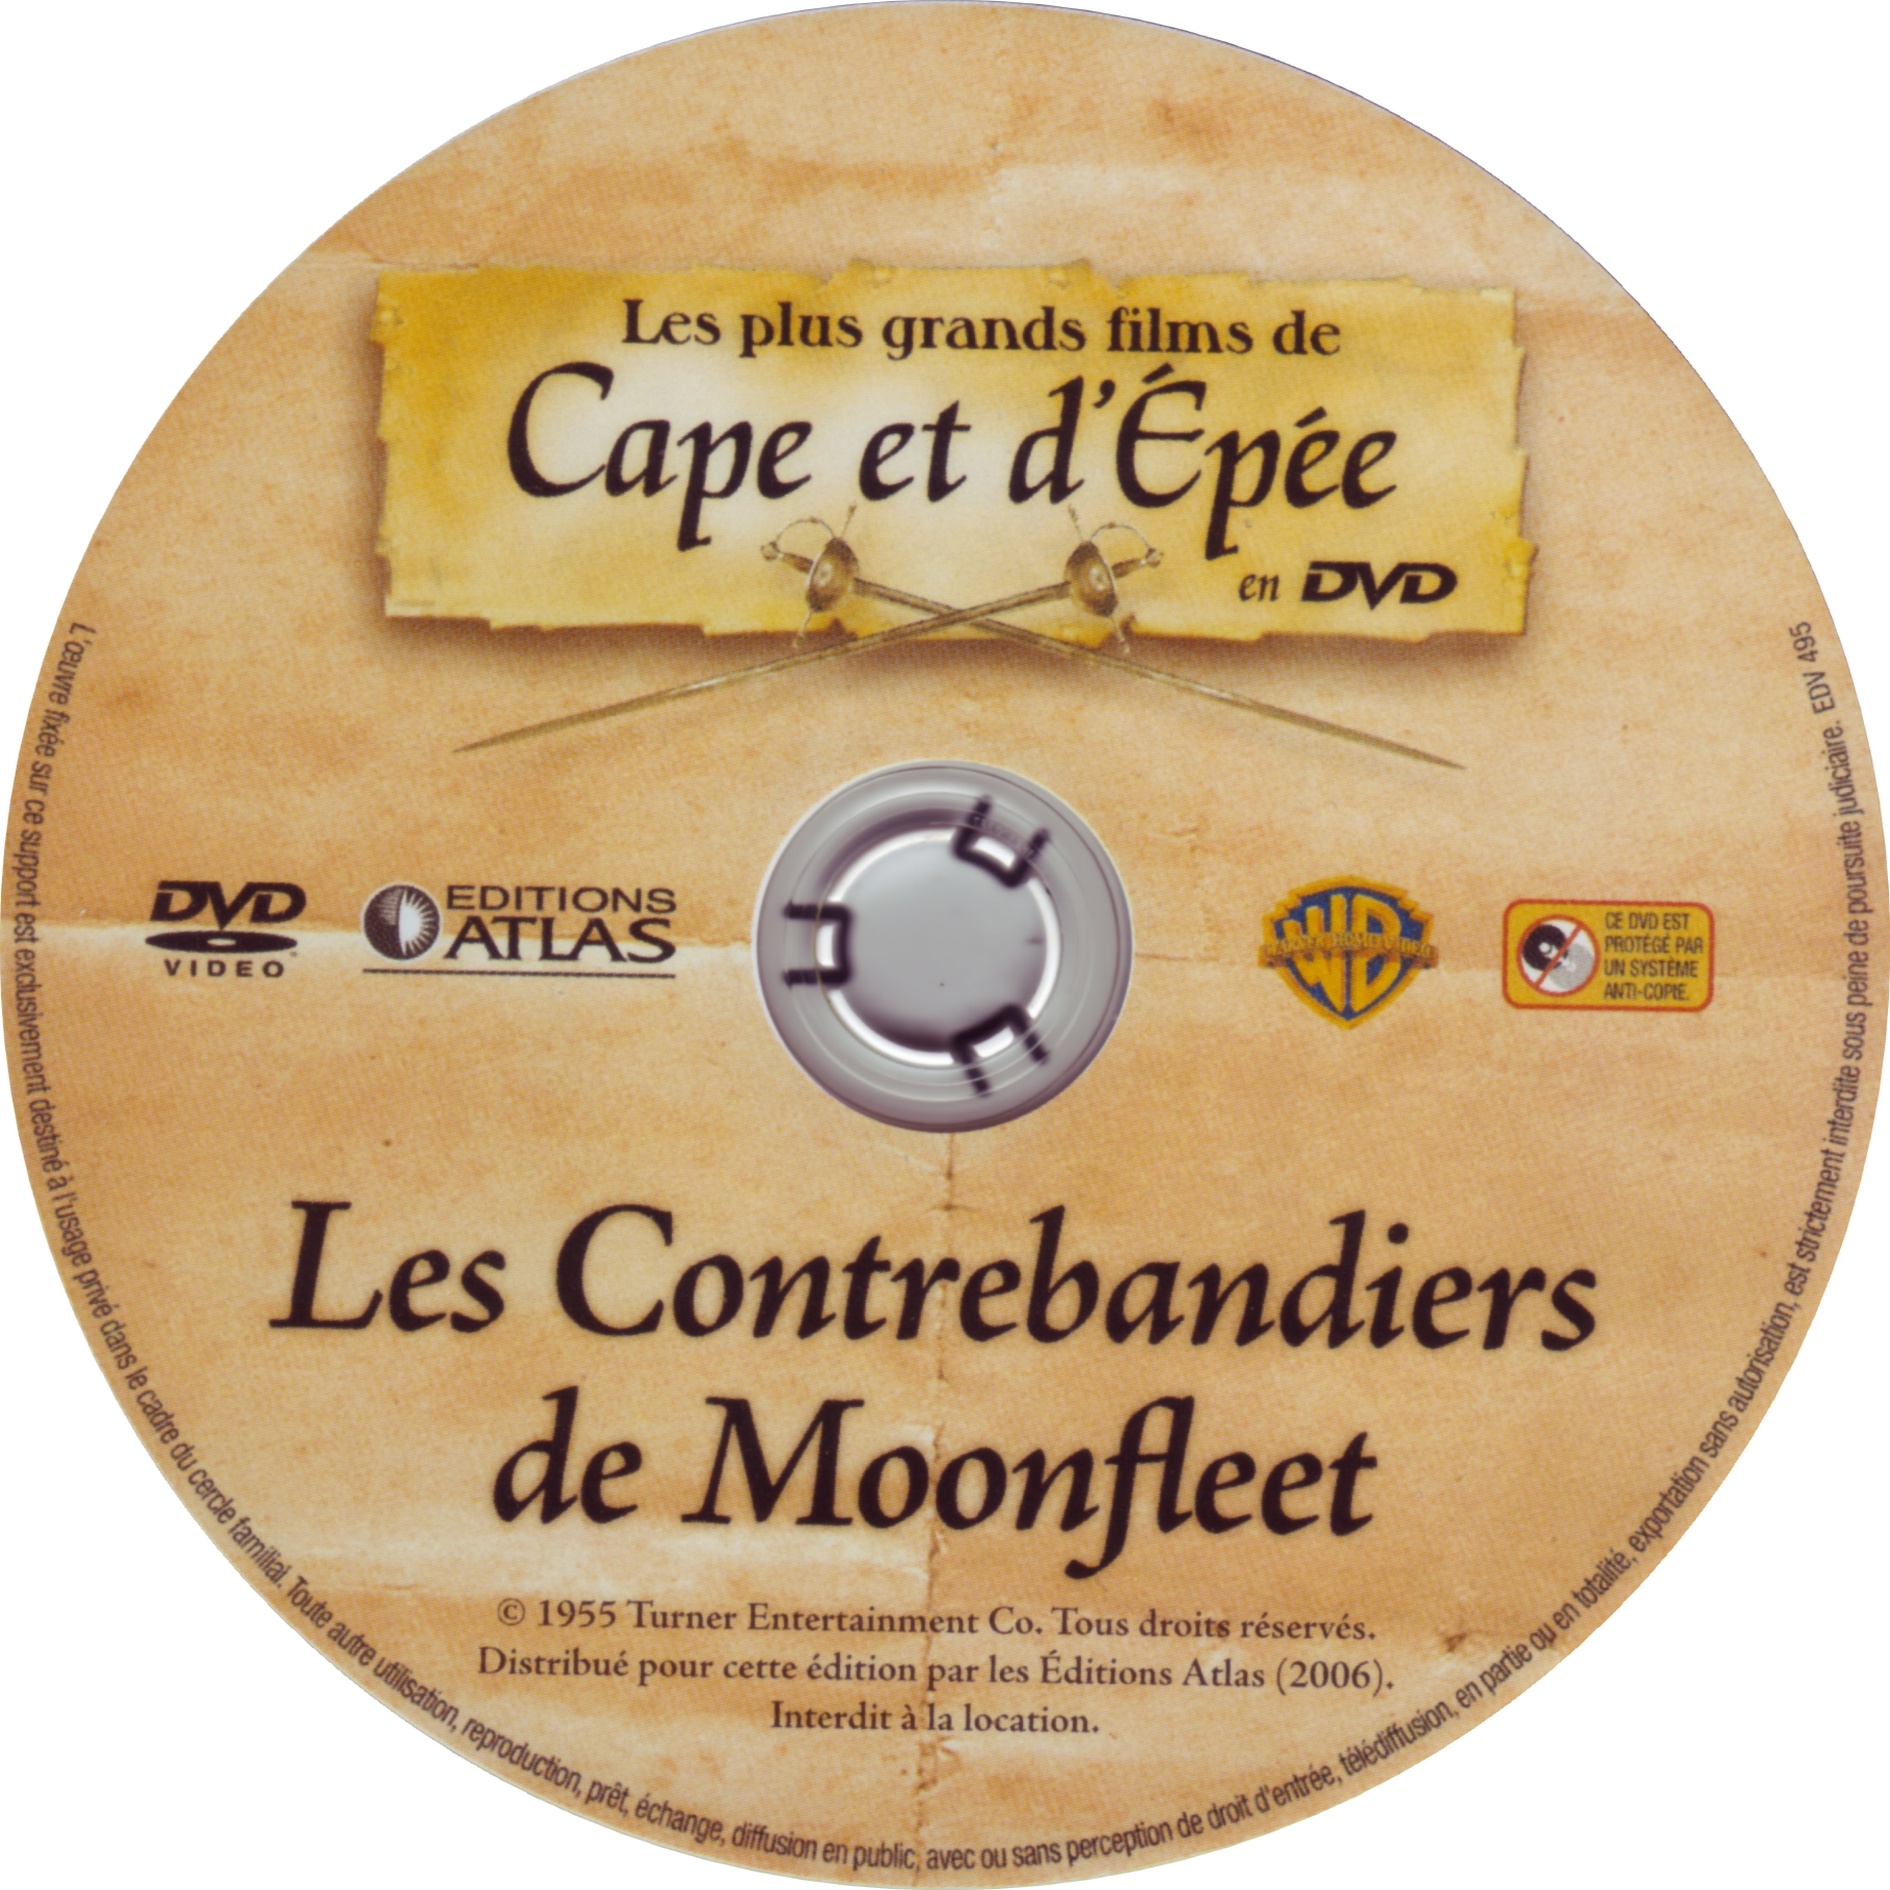 Les contrebandiers de moonfleet